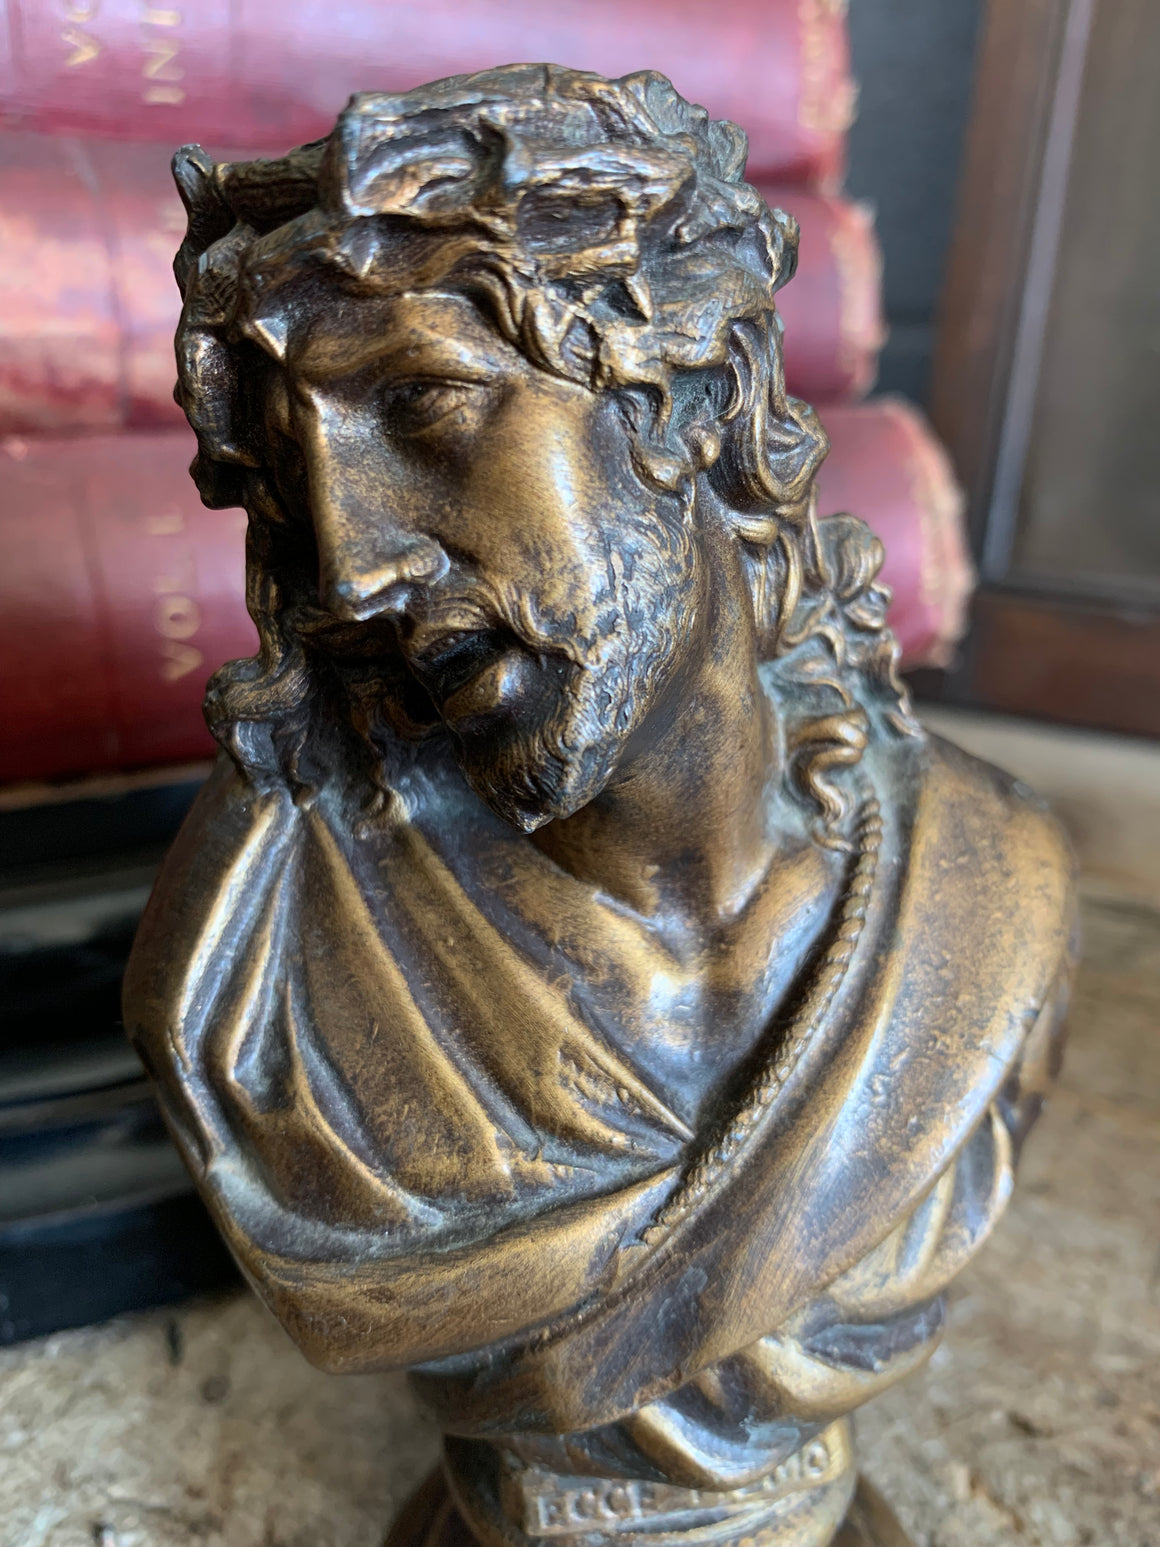 A small bust of Jesus in the Ecce Homo aspect